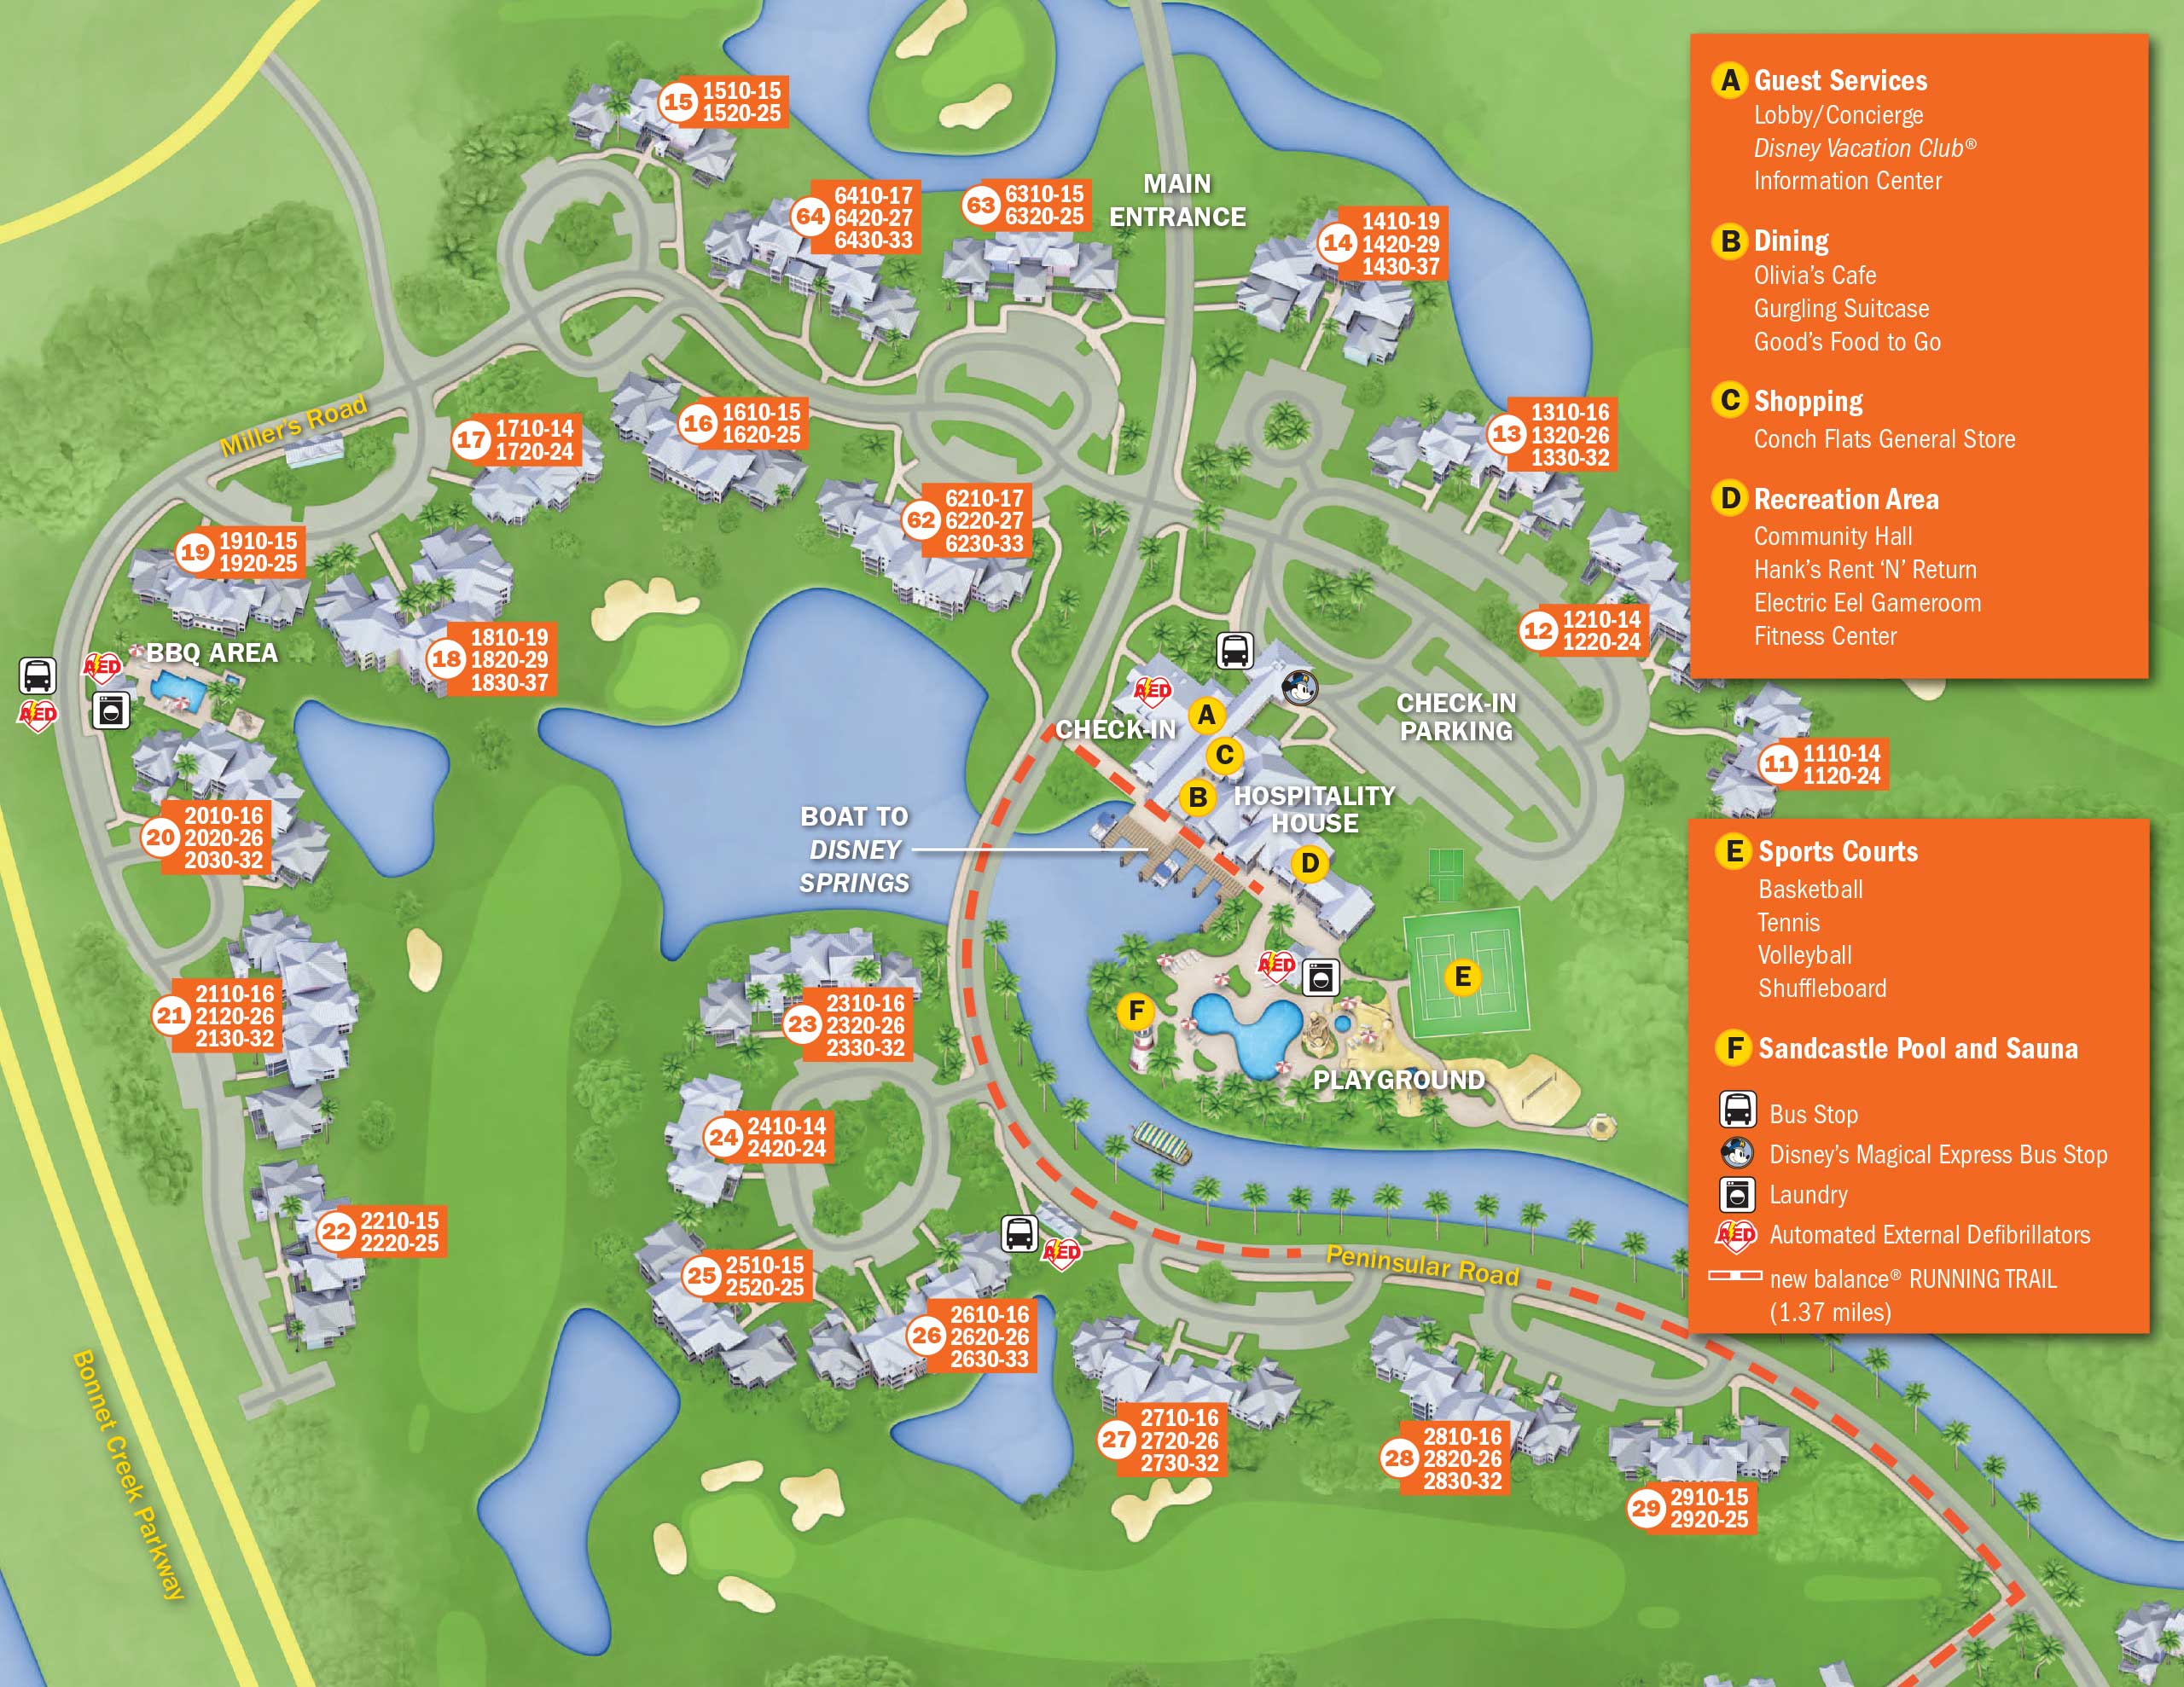 walt disney world resorts map April 2017 Walt Disney World Resort Hotel Maps Photo 27 Of 33 walt disney world resorts map